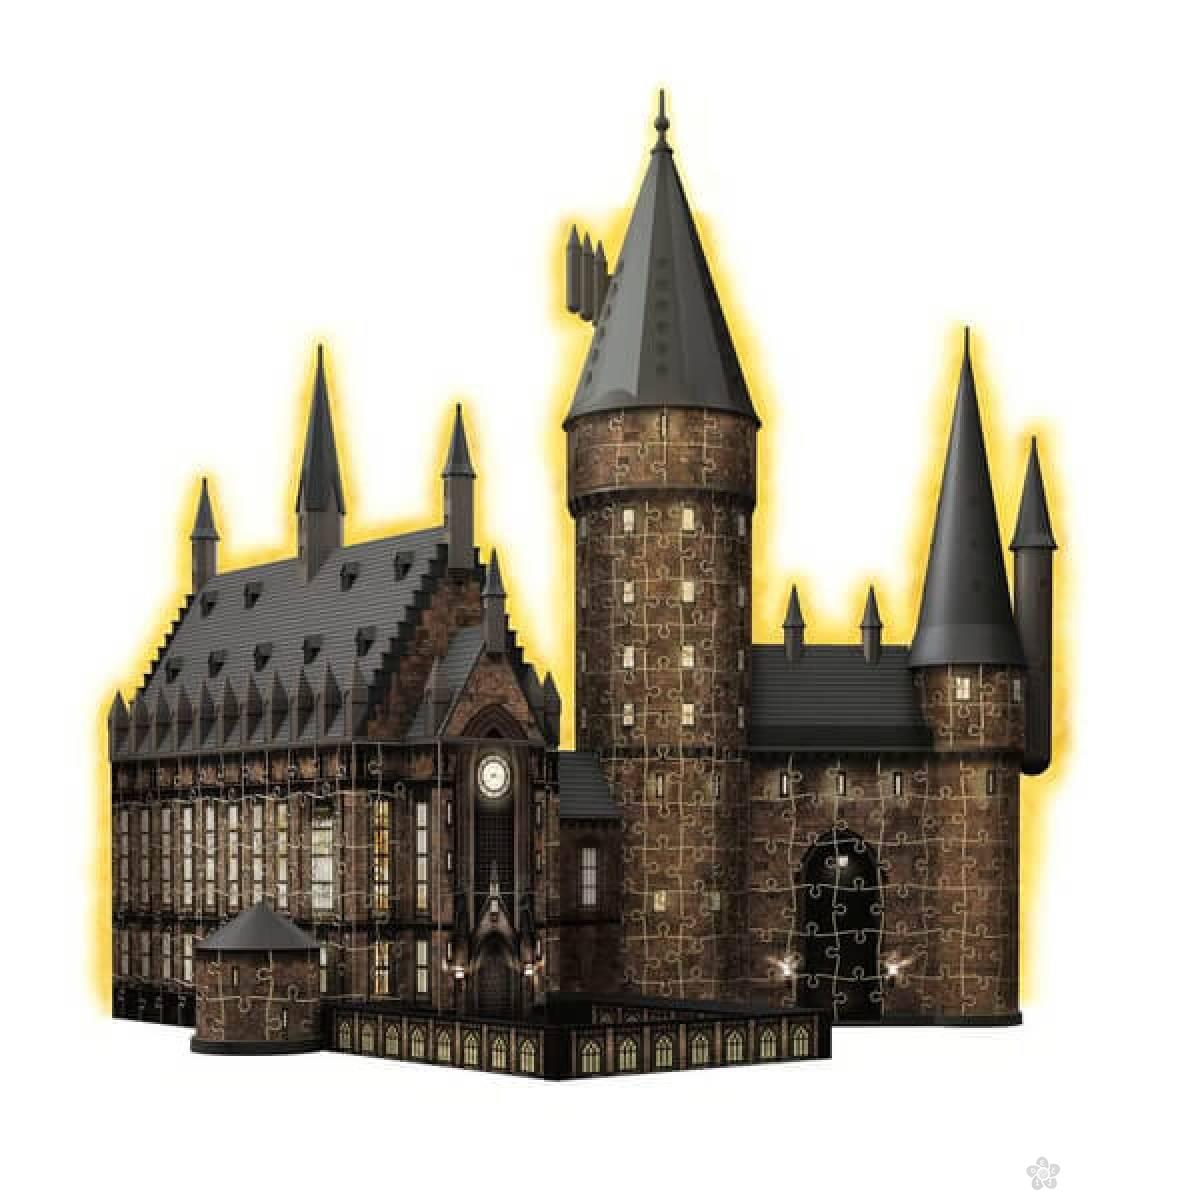 Ravensburger 3D puzzle Harry Potter Hogwarts Castle RA11550 